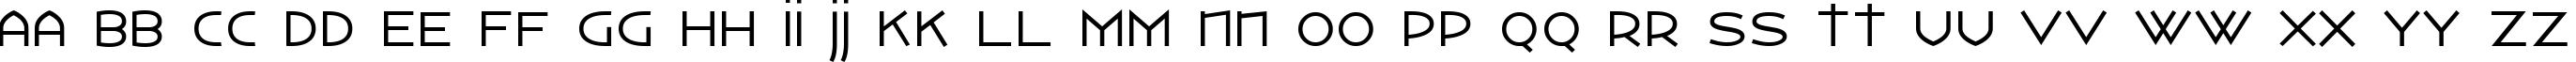 Пример написания английского алфавита шрифтом Watertown